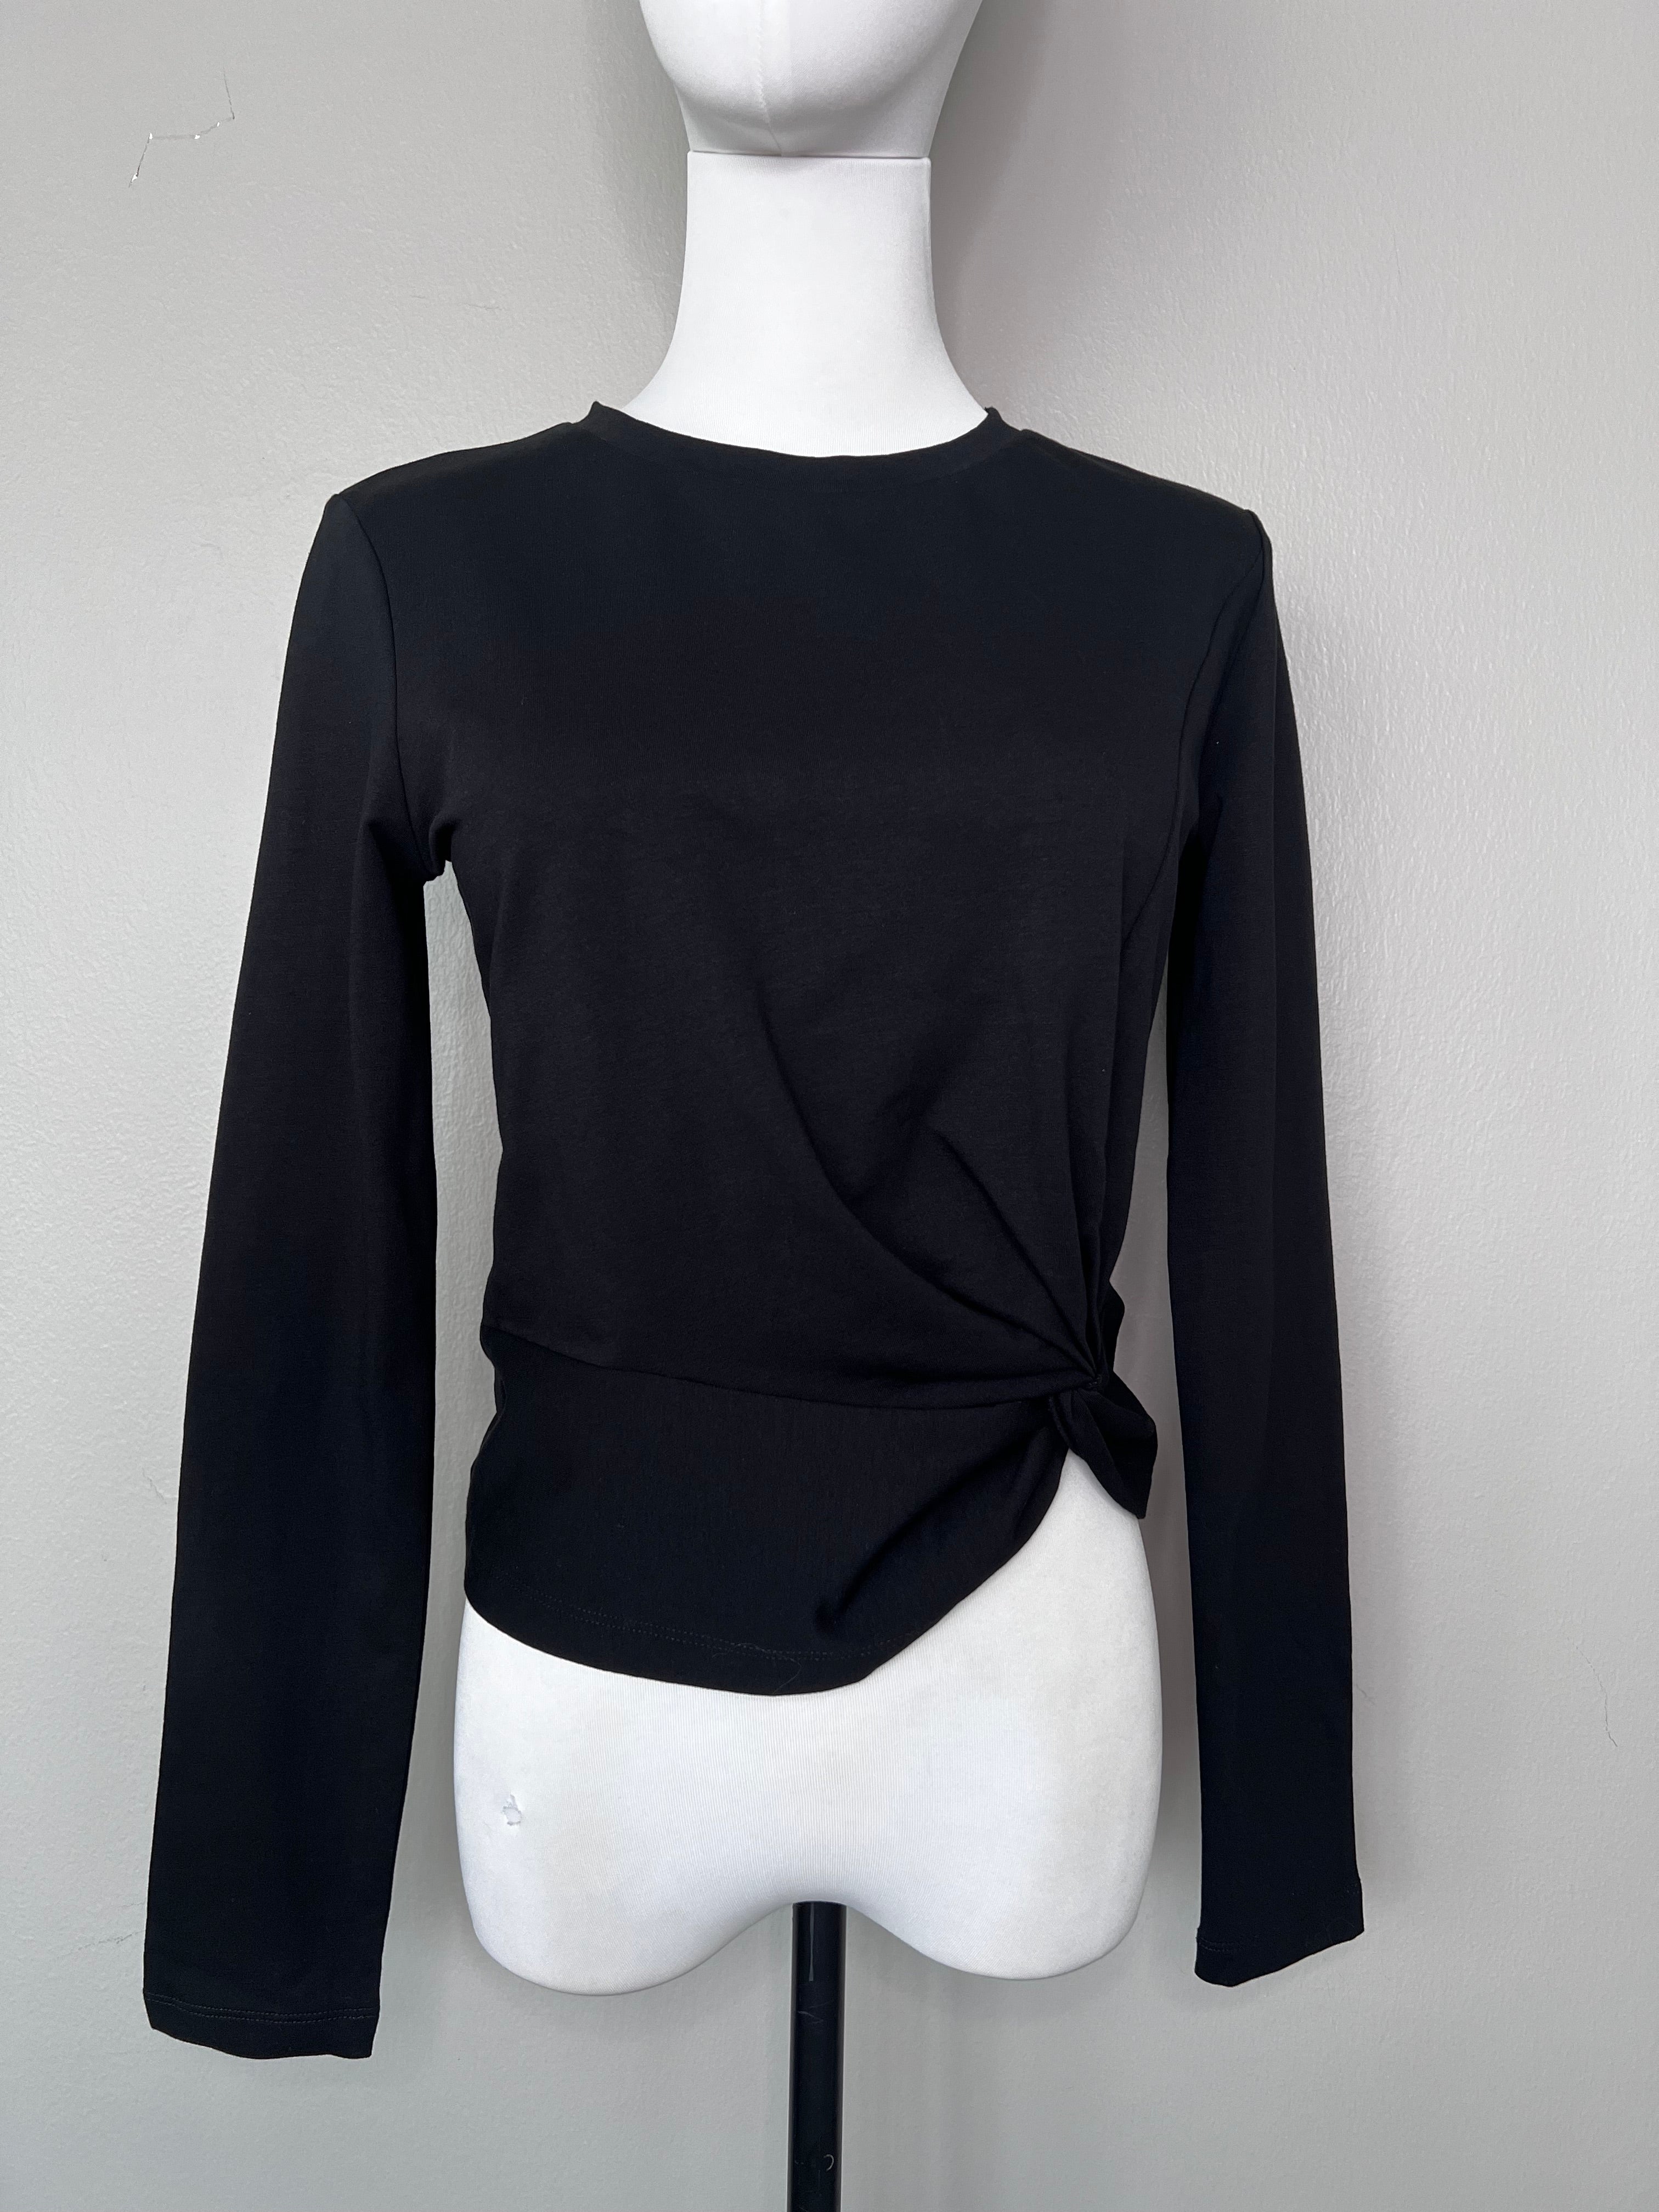 BRAND NEW! Black plain longsleeve shirt with knot design - TOUT À COUP